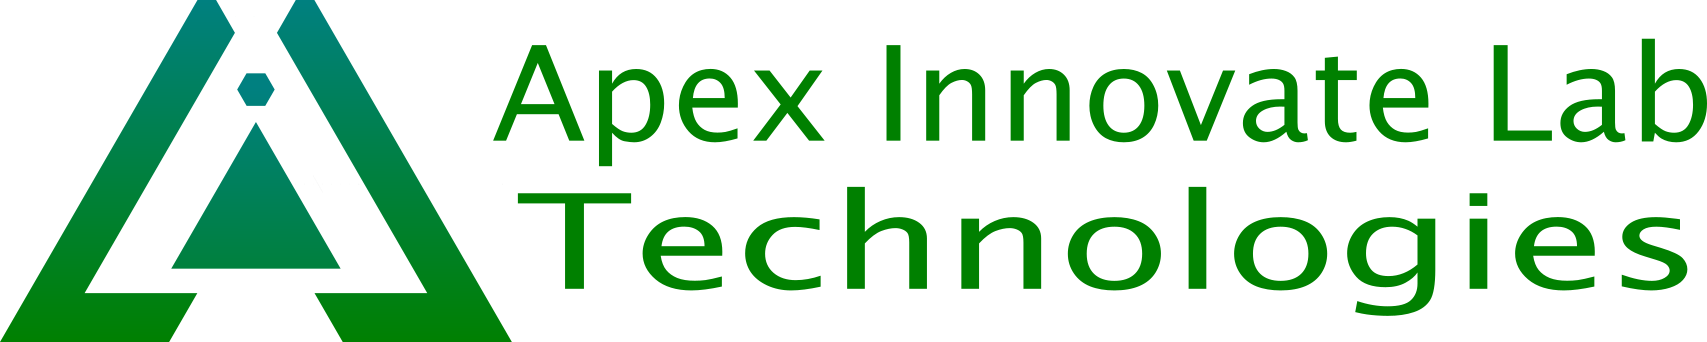 Apex Innovate Lab, your digitization partner